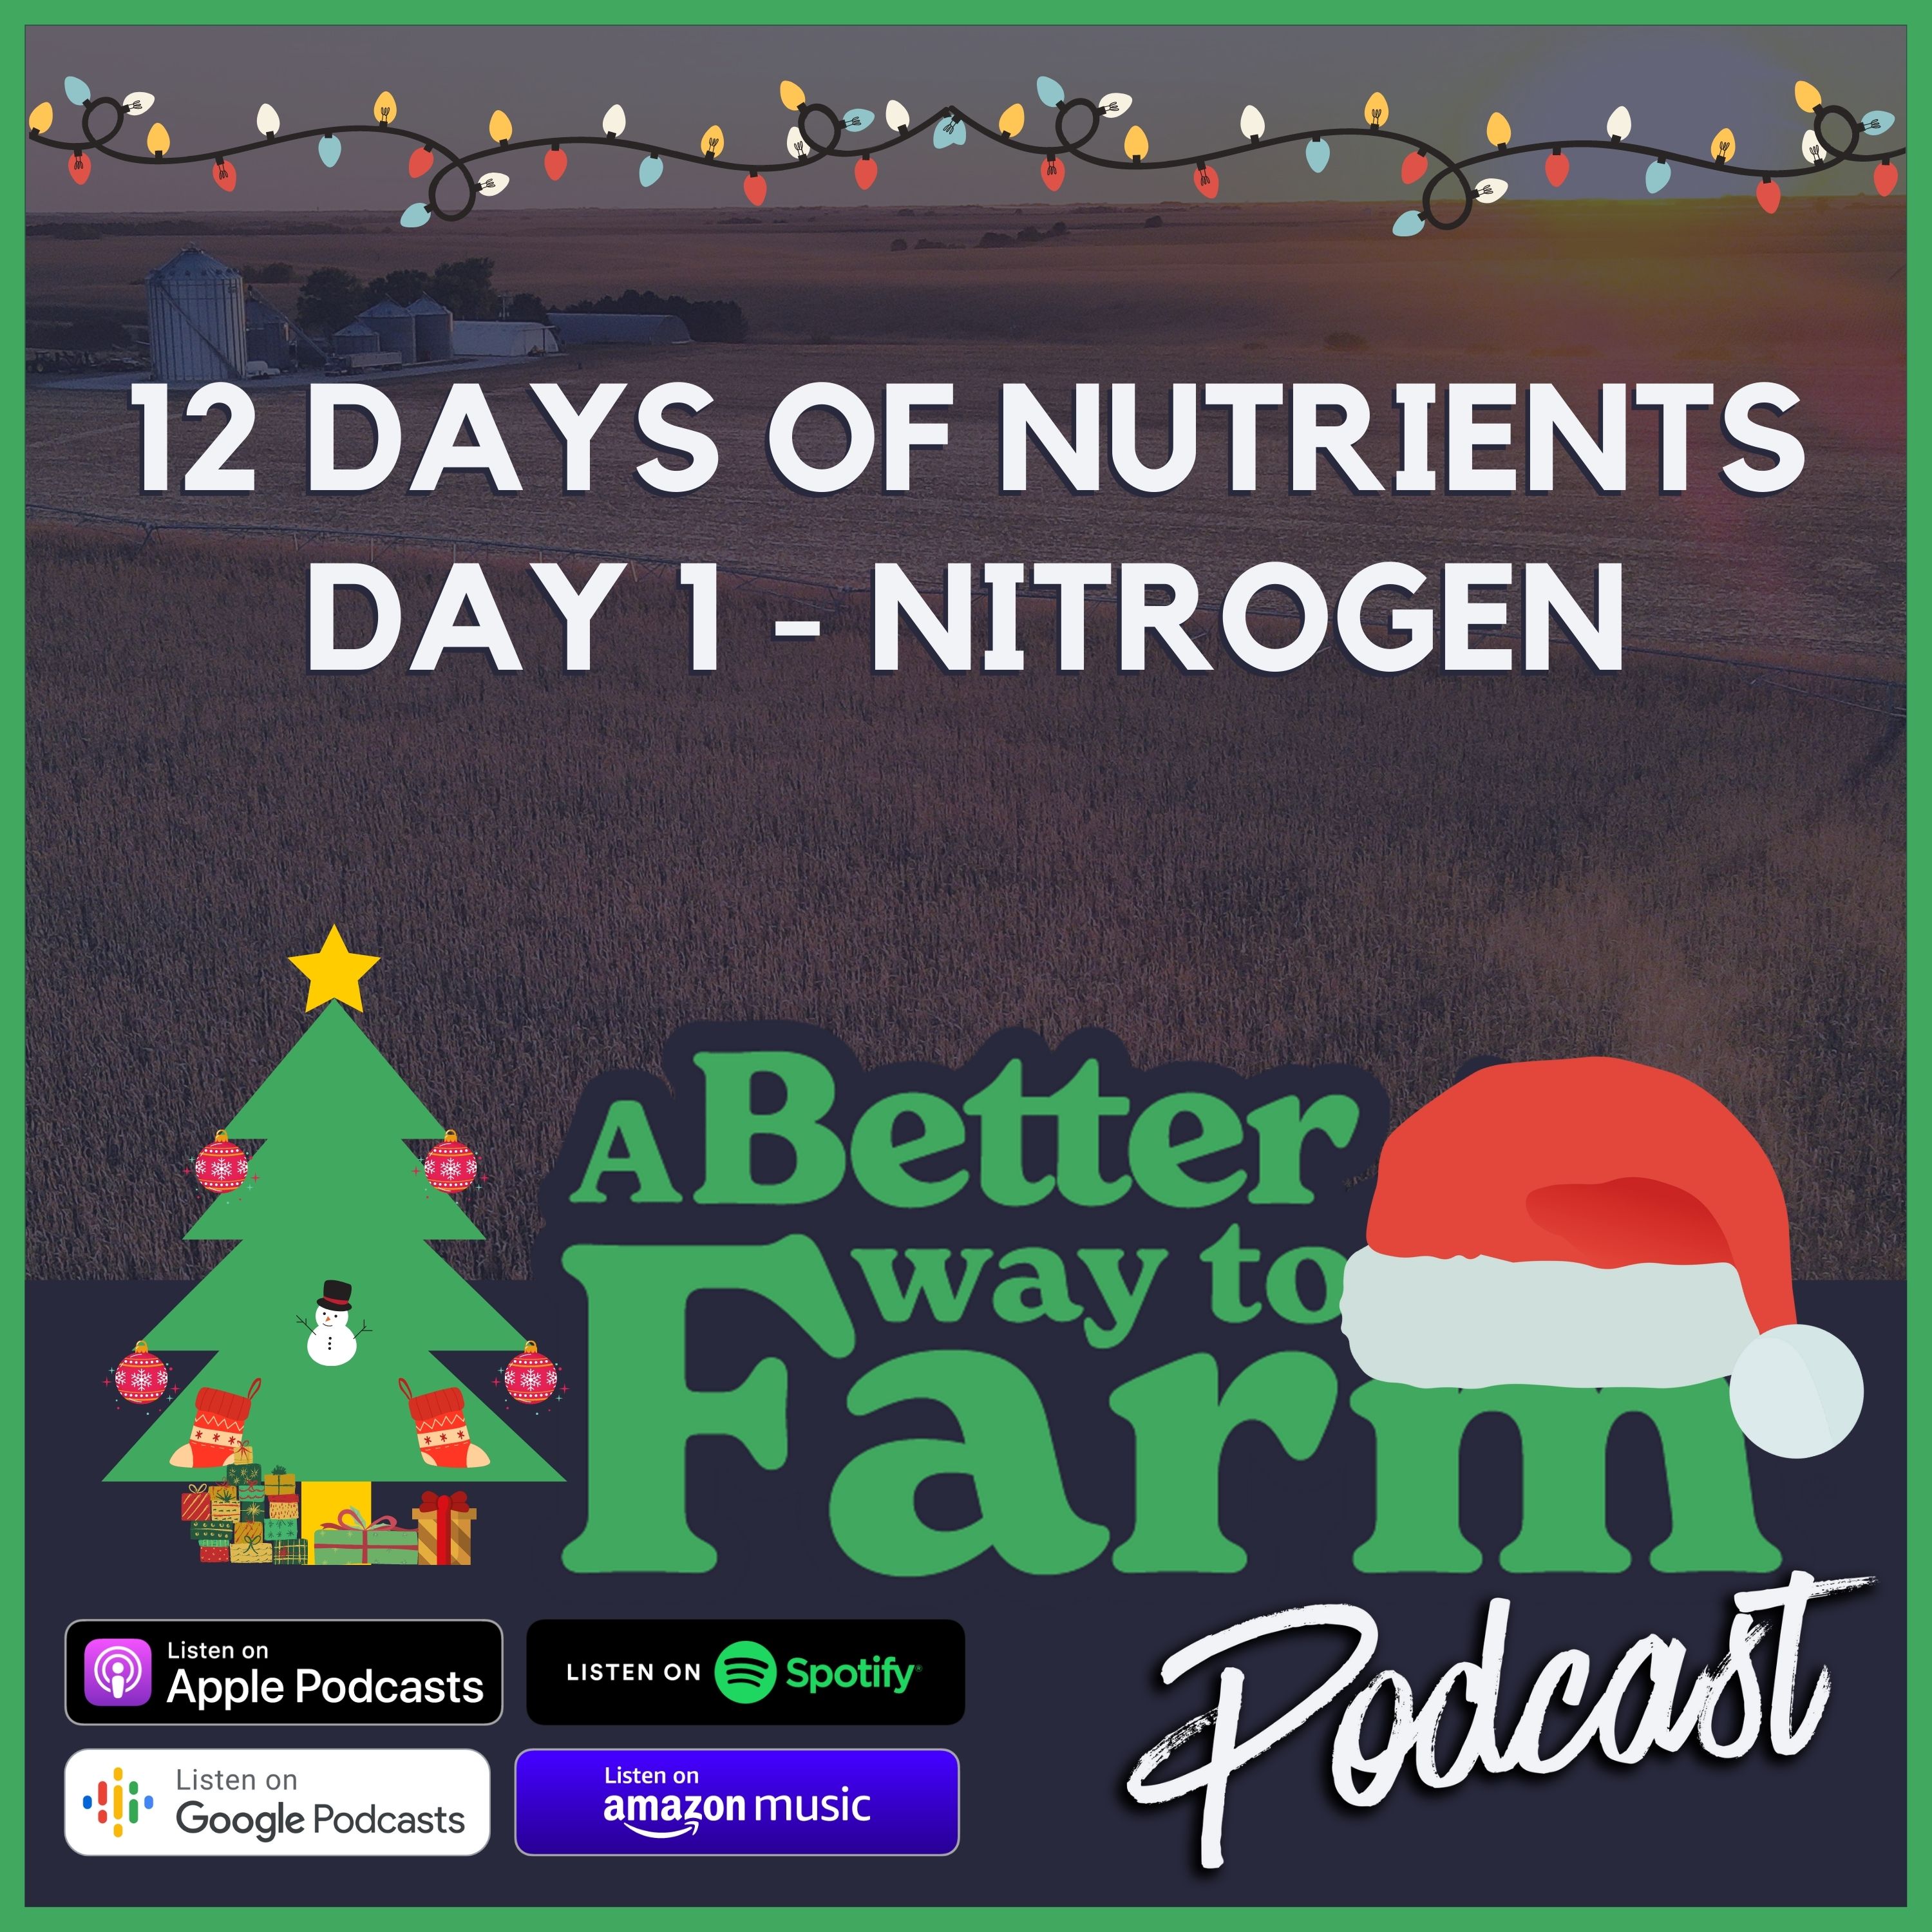 12 Days of Nutrients: Day 1 - Nitrogen